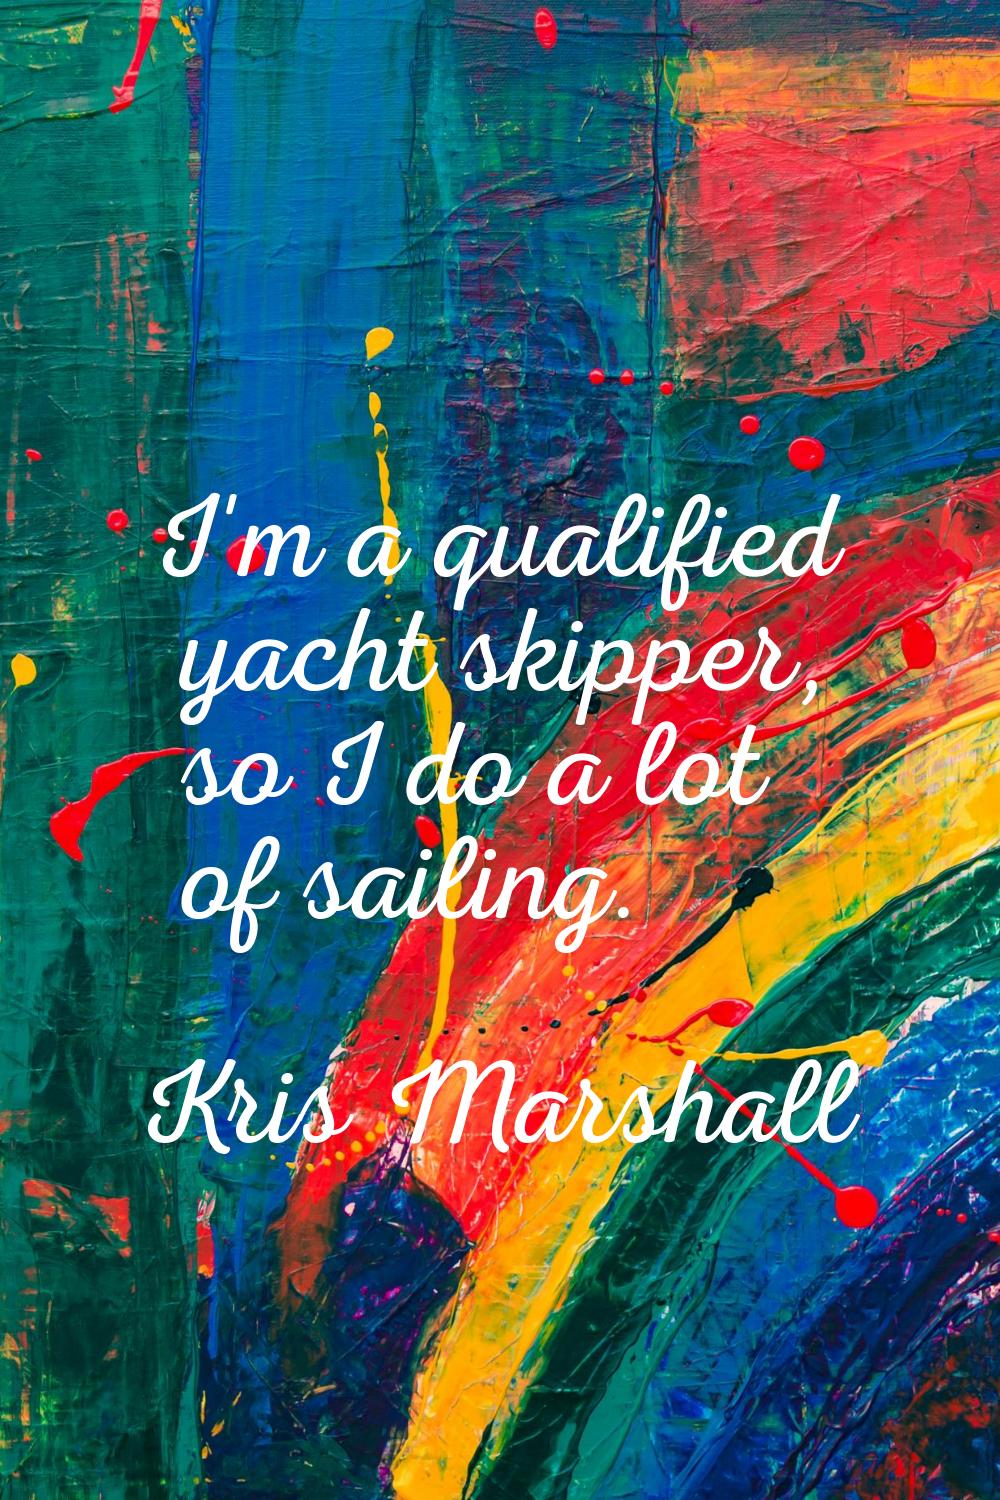 I'm a qualified yacht skipper, so I do a lot of sailing.